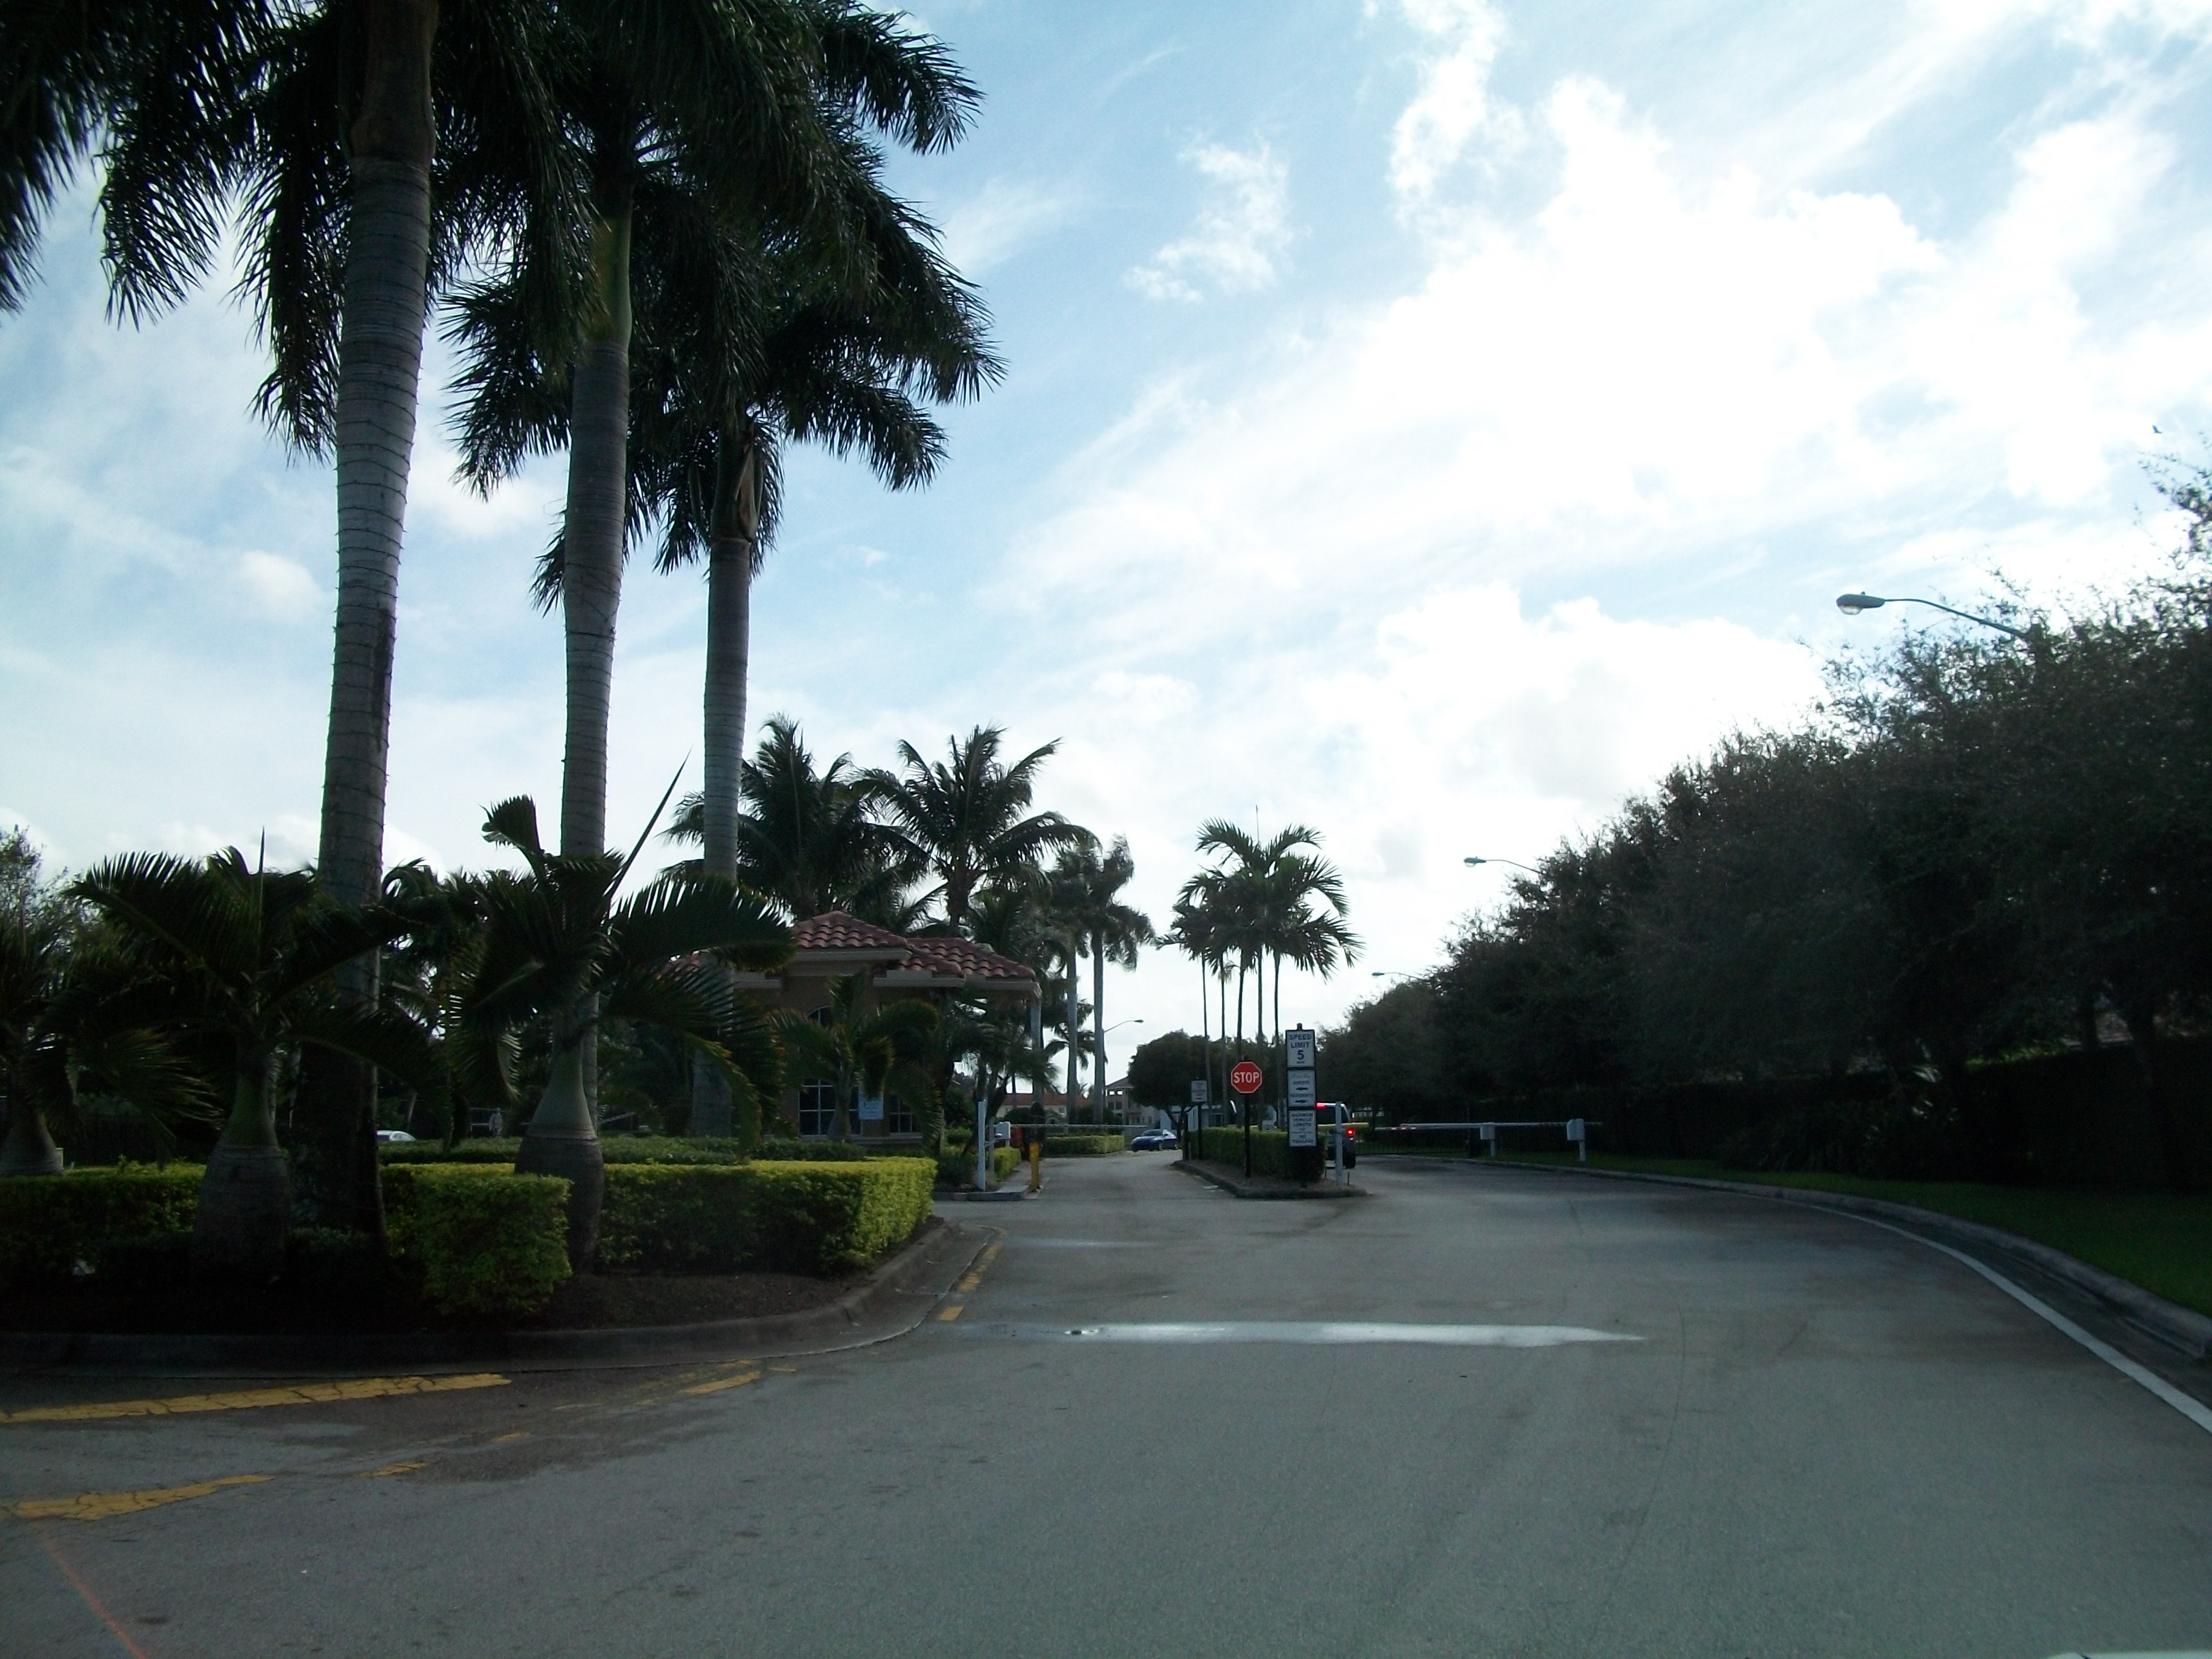 Briar Bay foreclosures in West Palm Beach